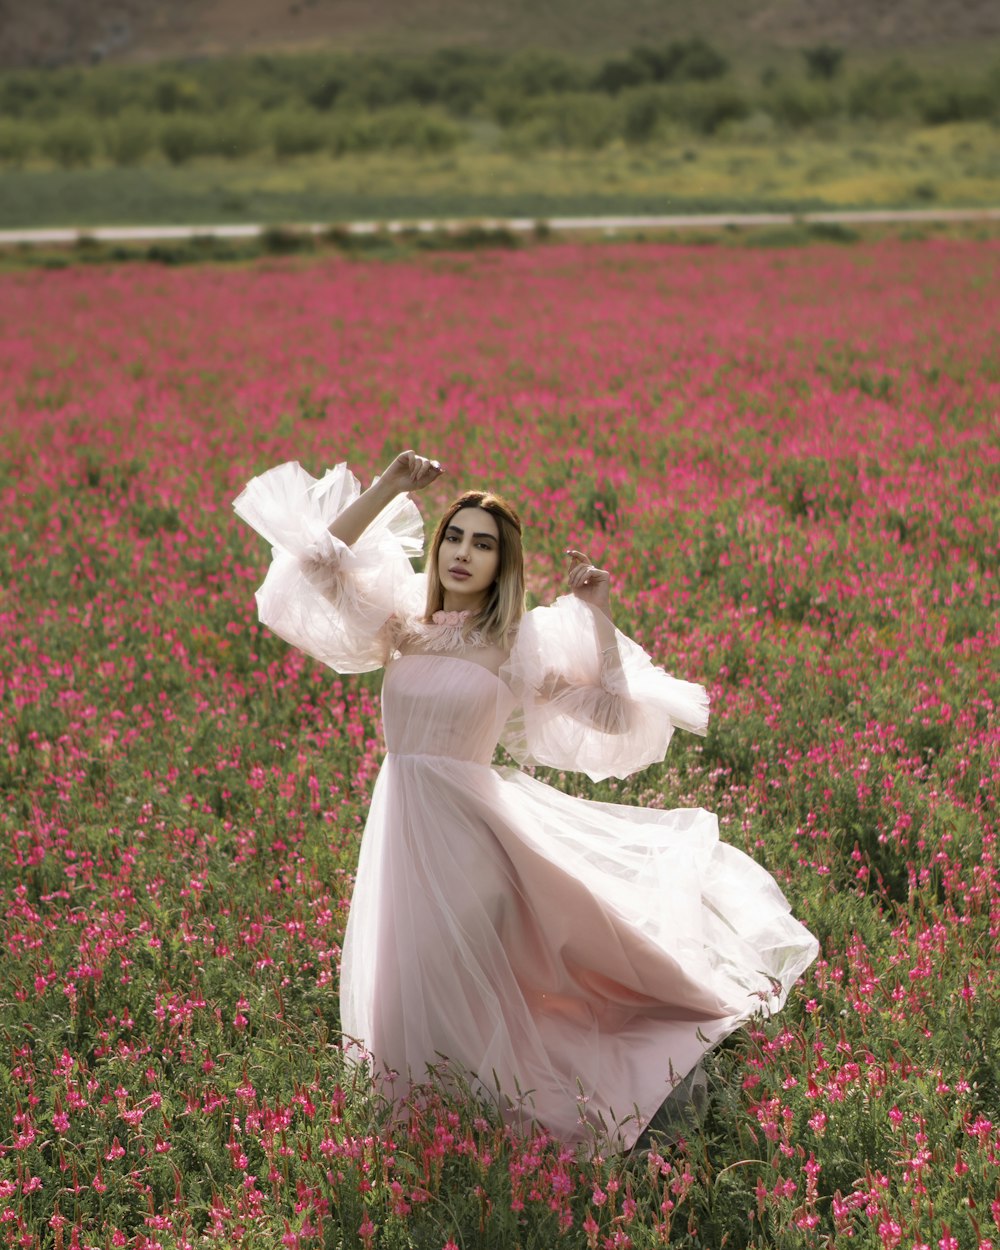 Girl in white dress lying on red flower field during daytime photo